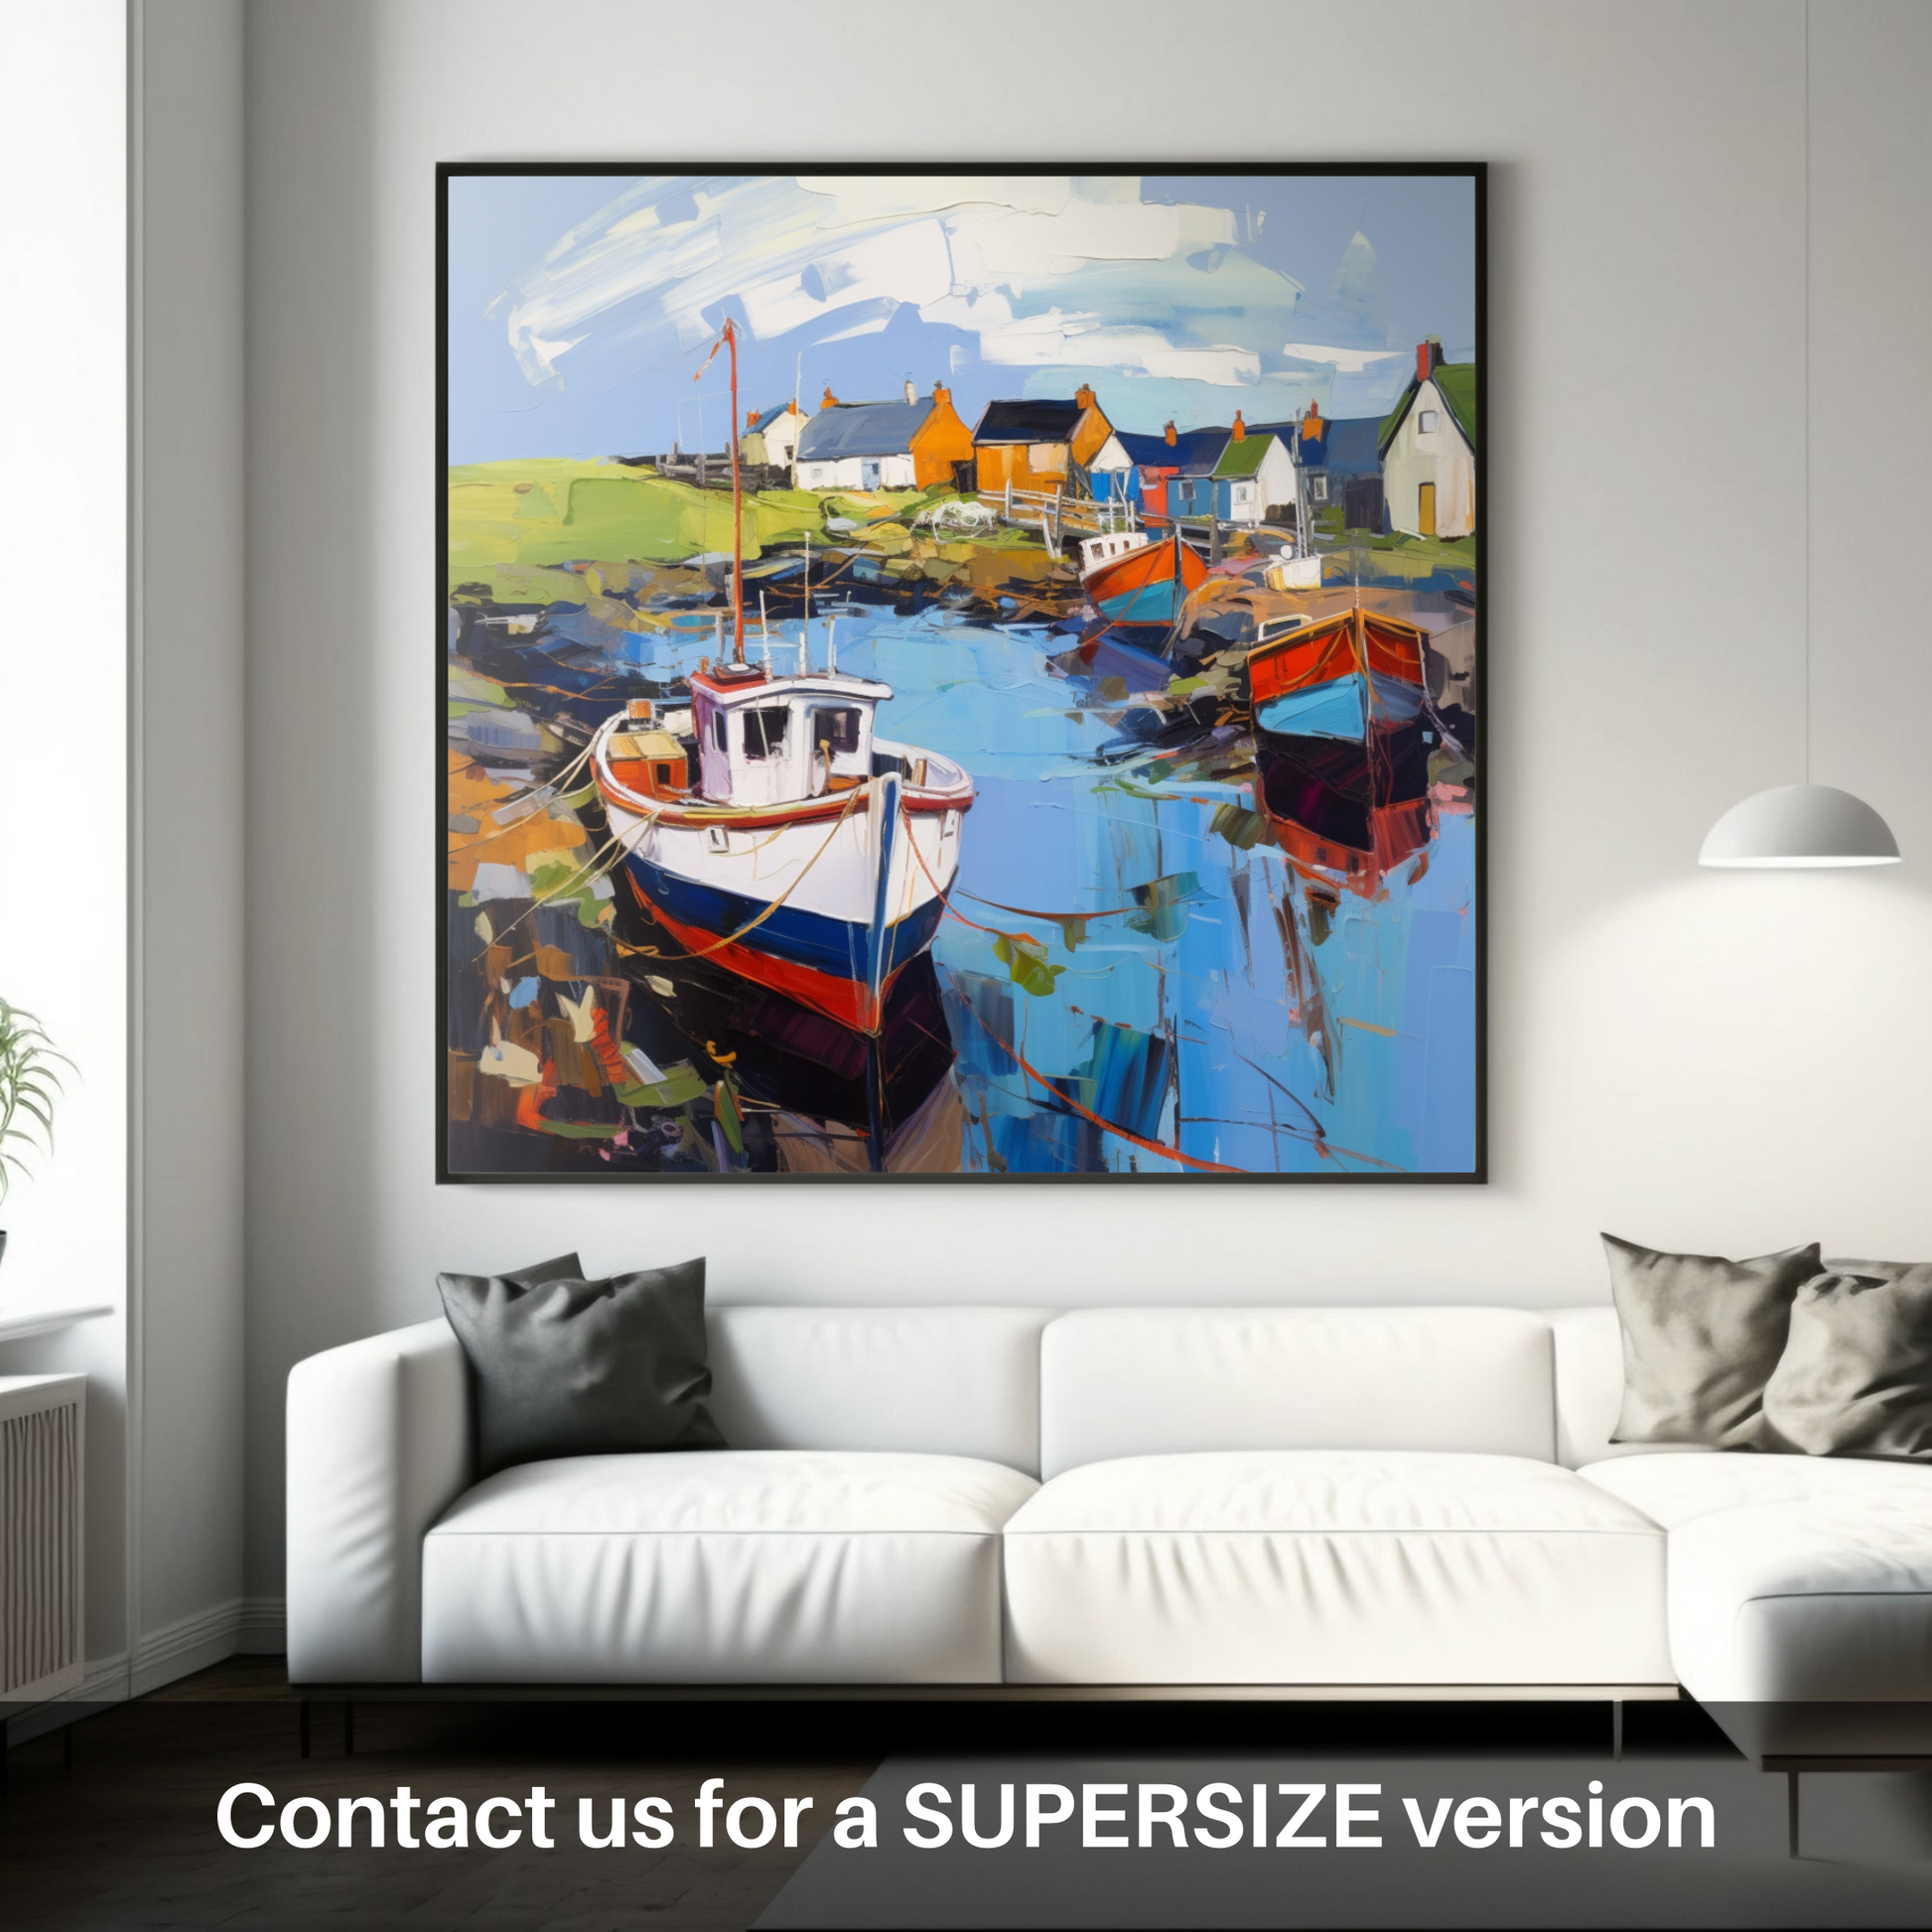 Huge supersize print of Lybster Harbour, Caithness